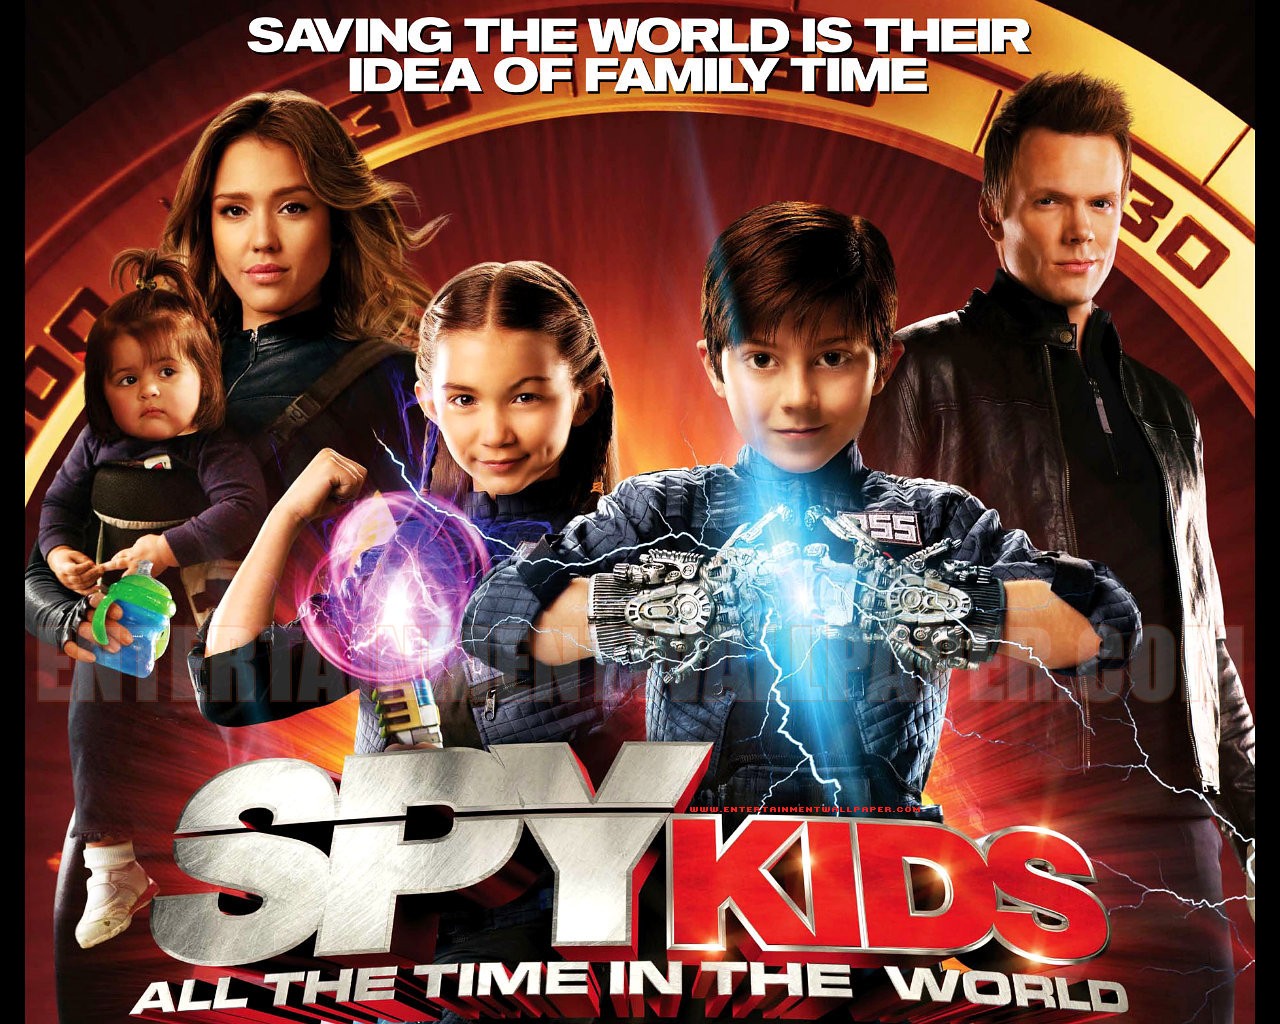 http://2.bp.blogspot.com/-NFNTa3nEHtg/TkooN2UnKgI/AAAAAAAAAMo/-cj3hOb2tNk/s1600/spy-kids-4-all-the-time-in-the-world02.jpg